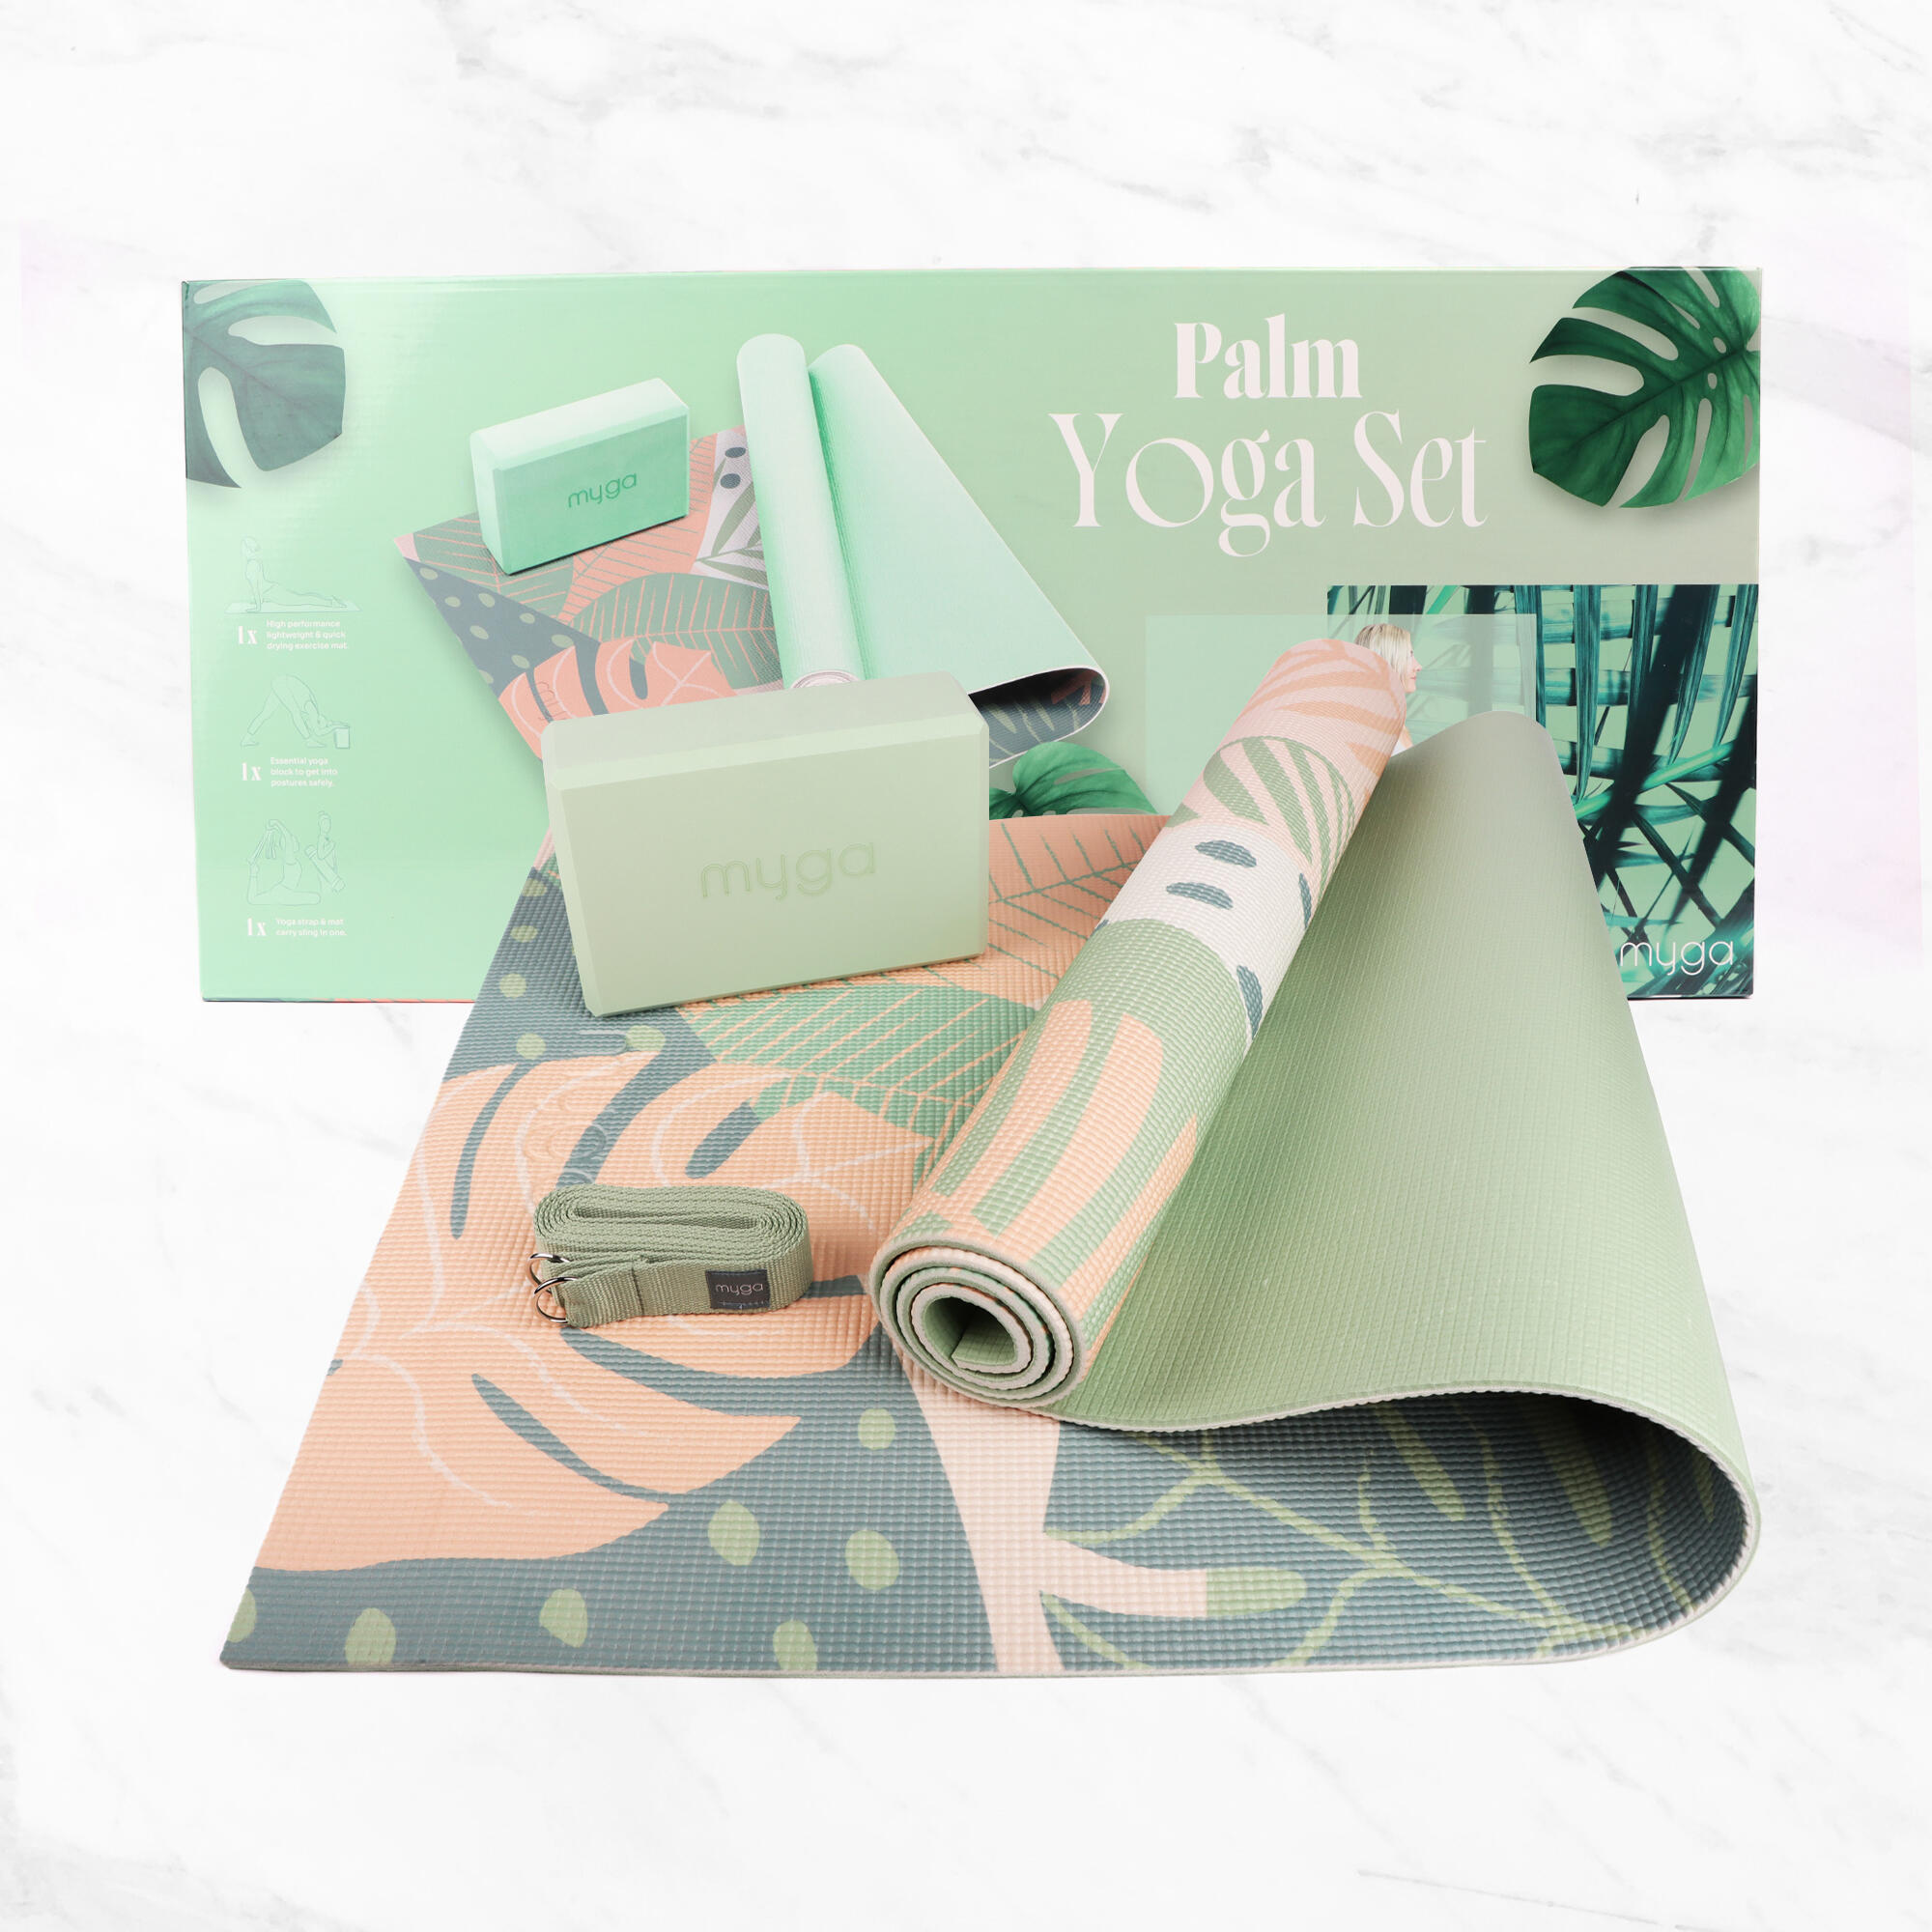 MYGA Yoga Starter Kit - Palm